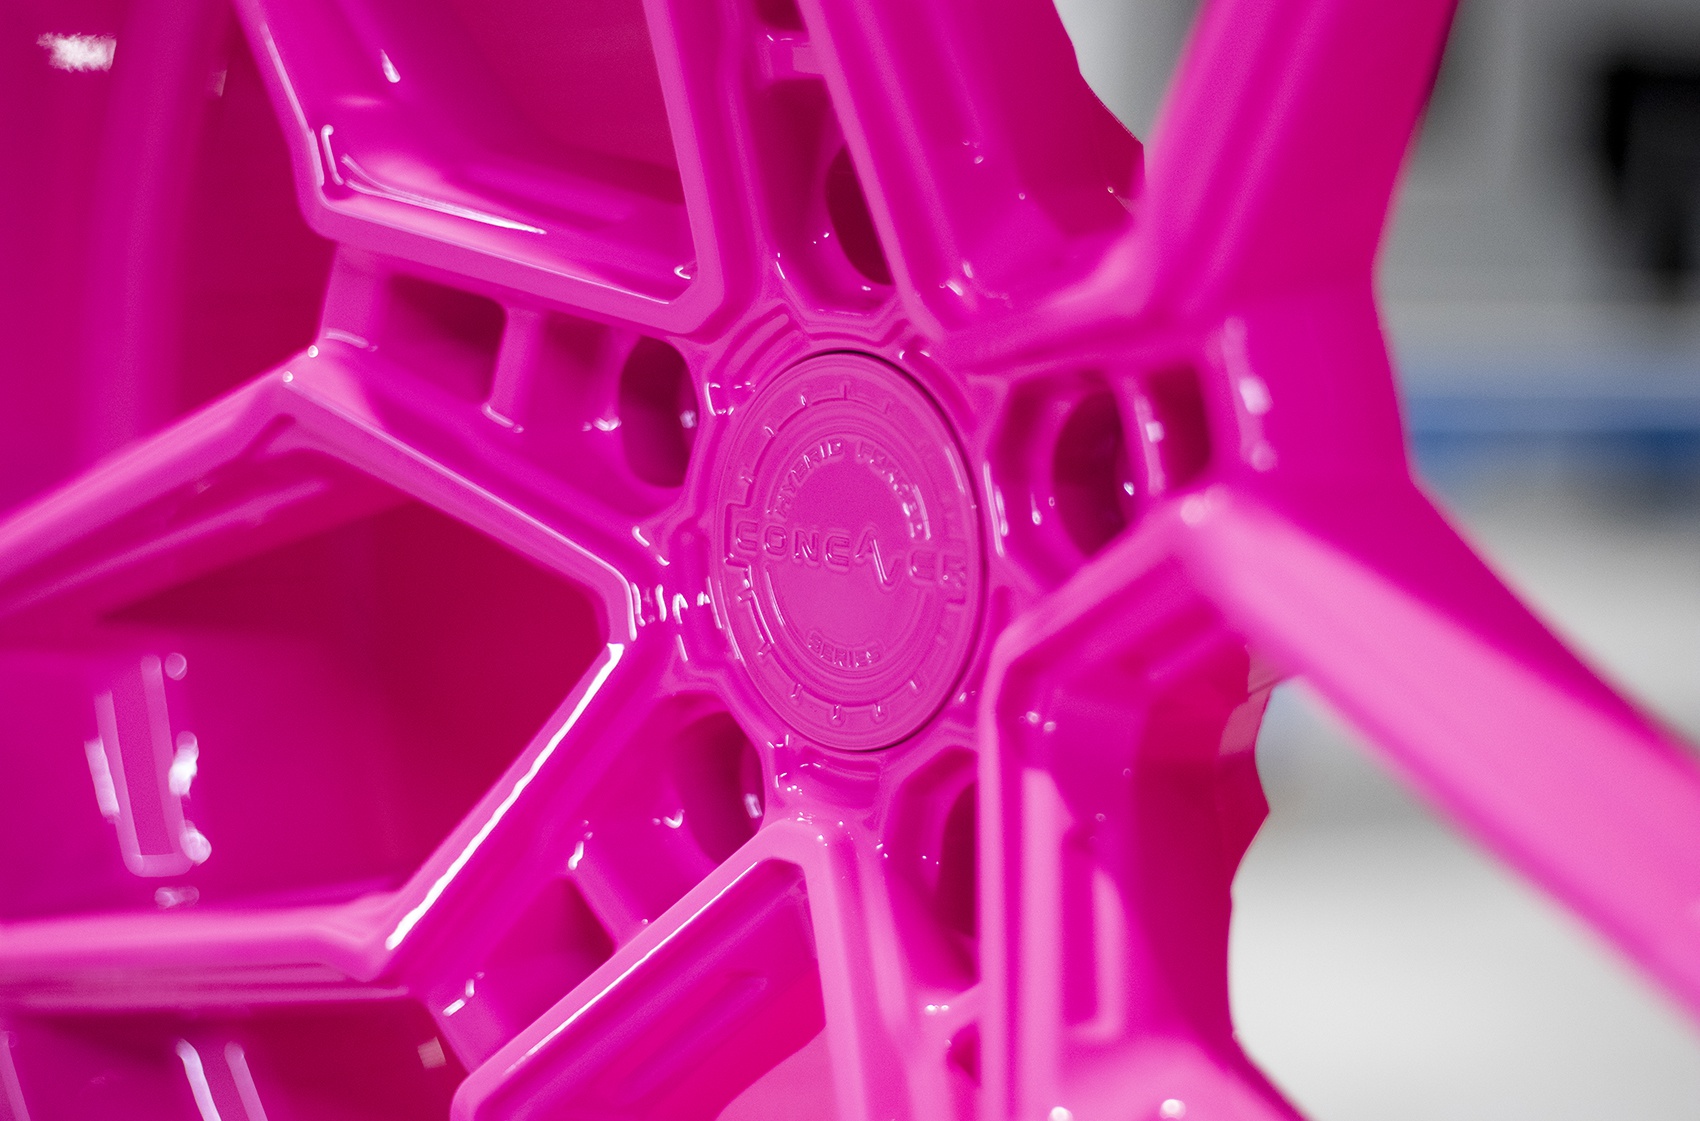   Concaver CVR5 Gloss Neon Pink